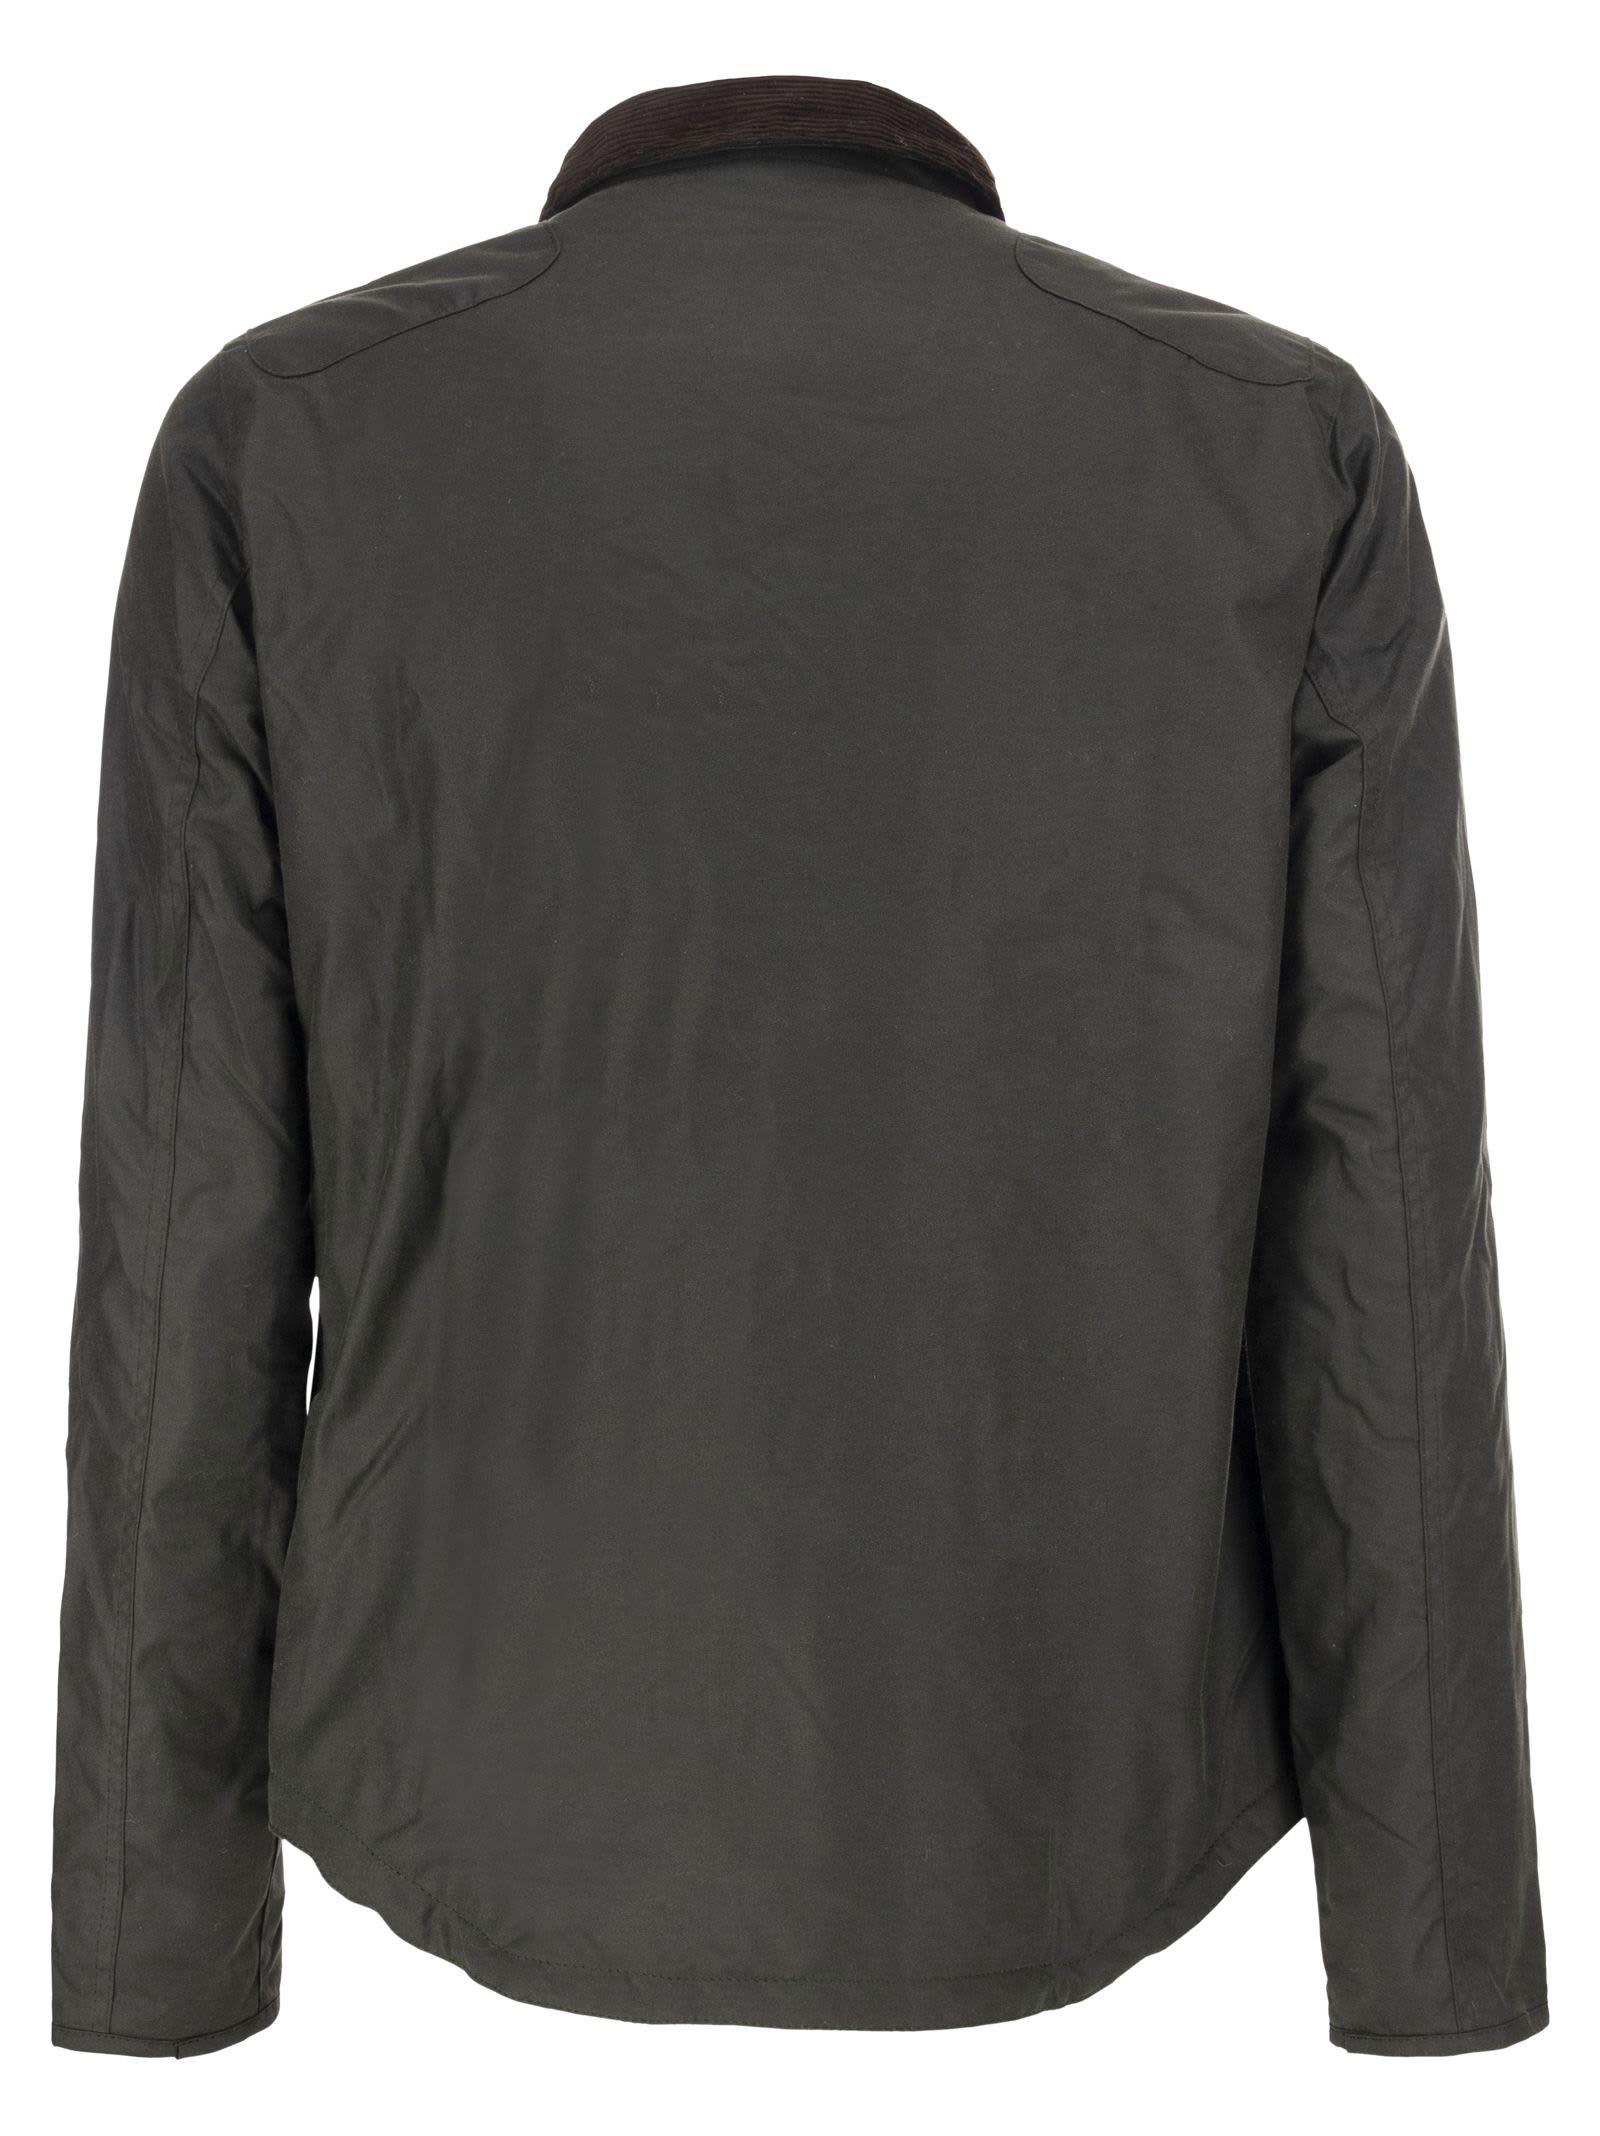 Barbour Reelin Waxed Cotton Jacket in Black for Men